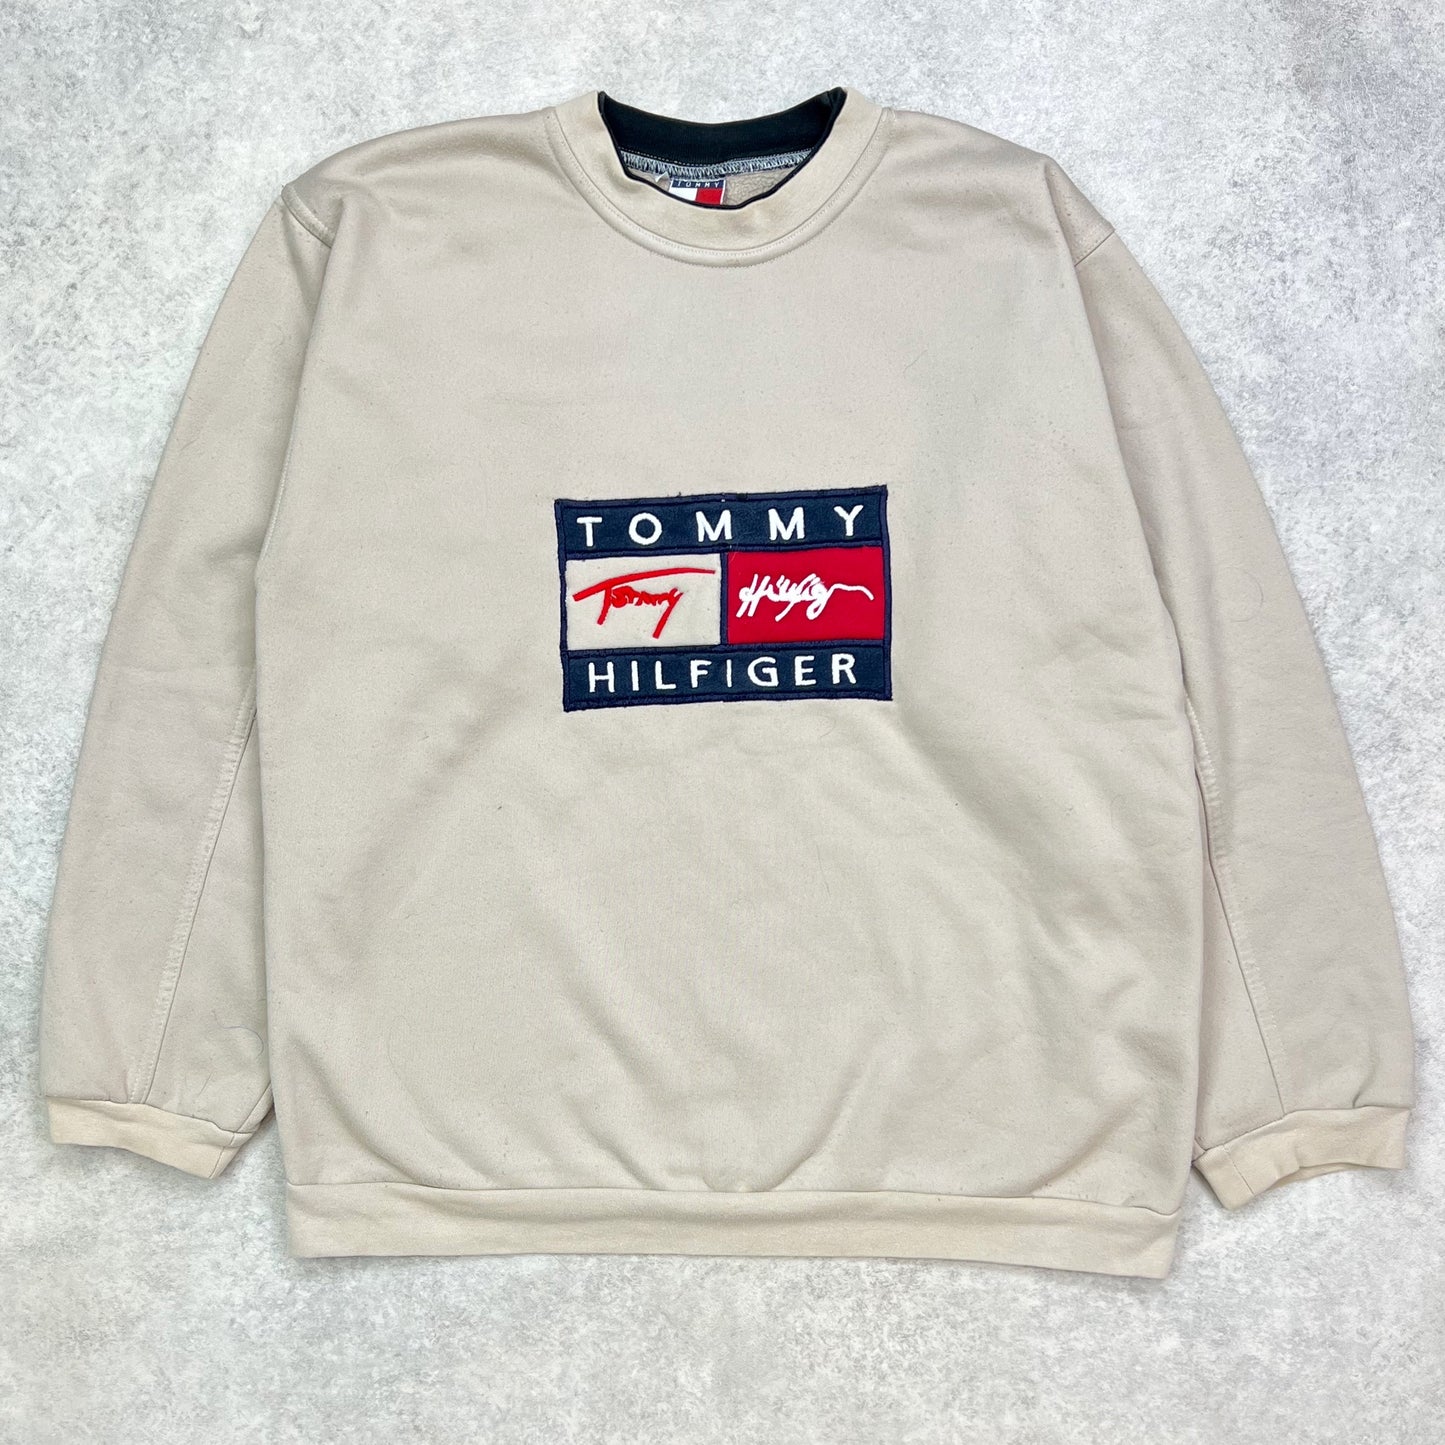 Tommy Hilfiger Embroidered Sweatshirt (S)